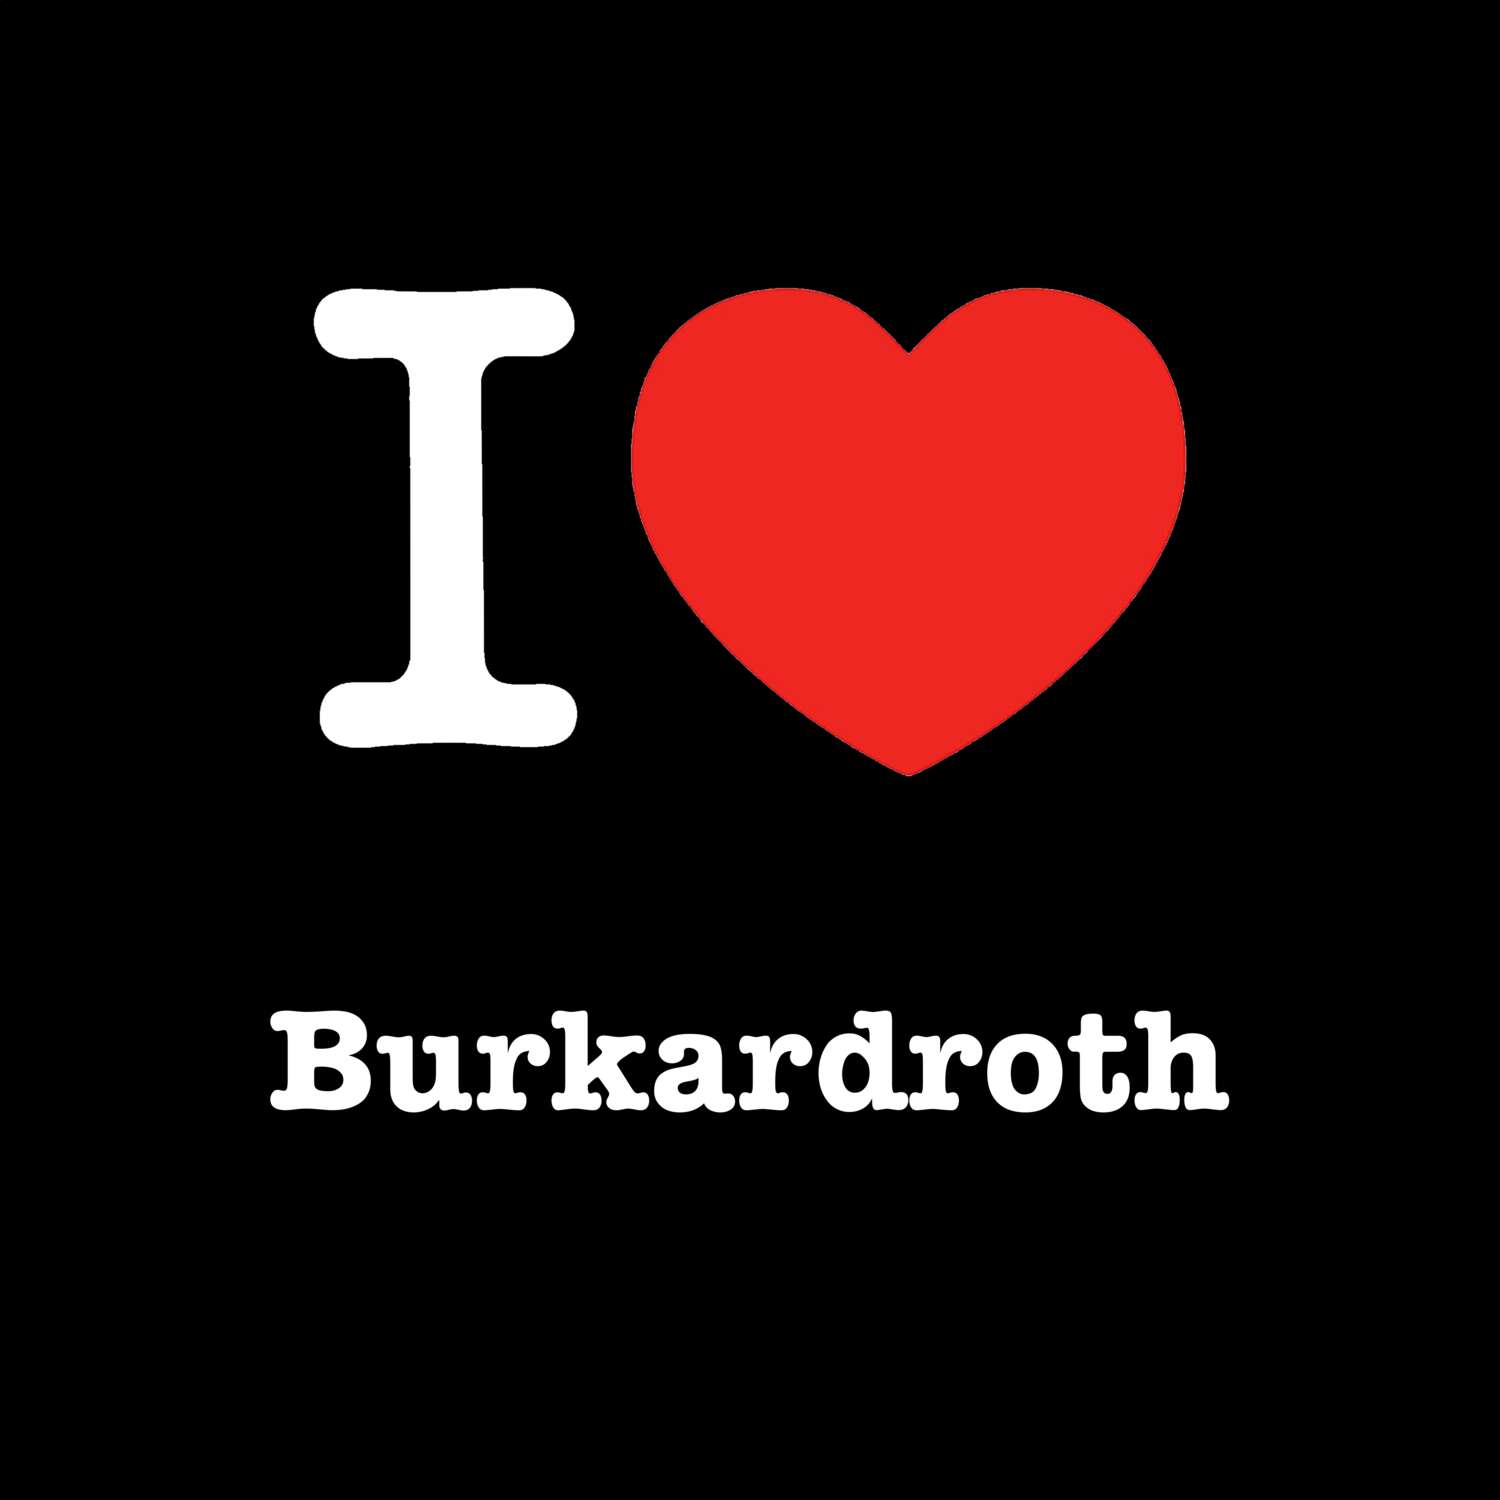 Burkardroth T-Shirt »I love«